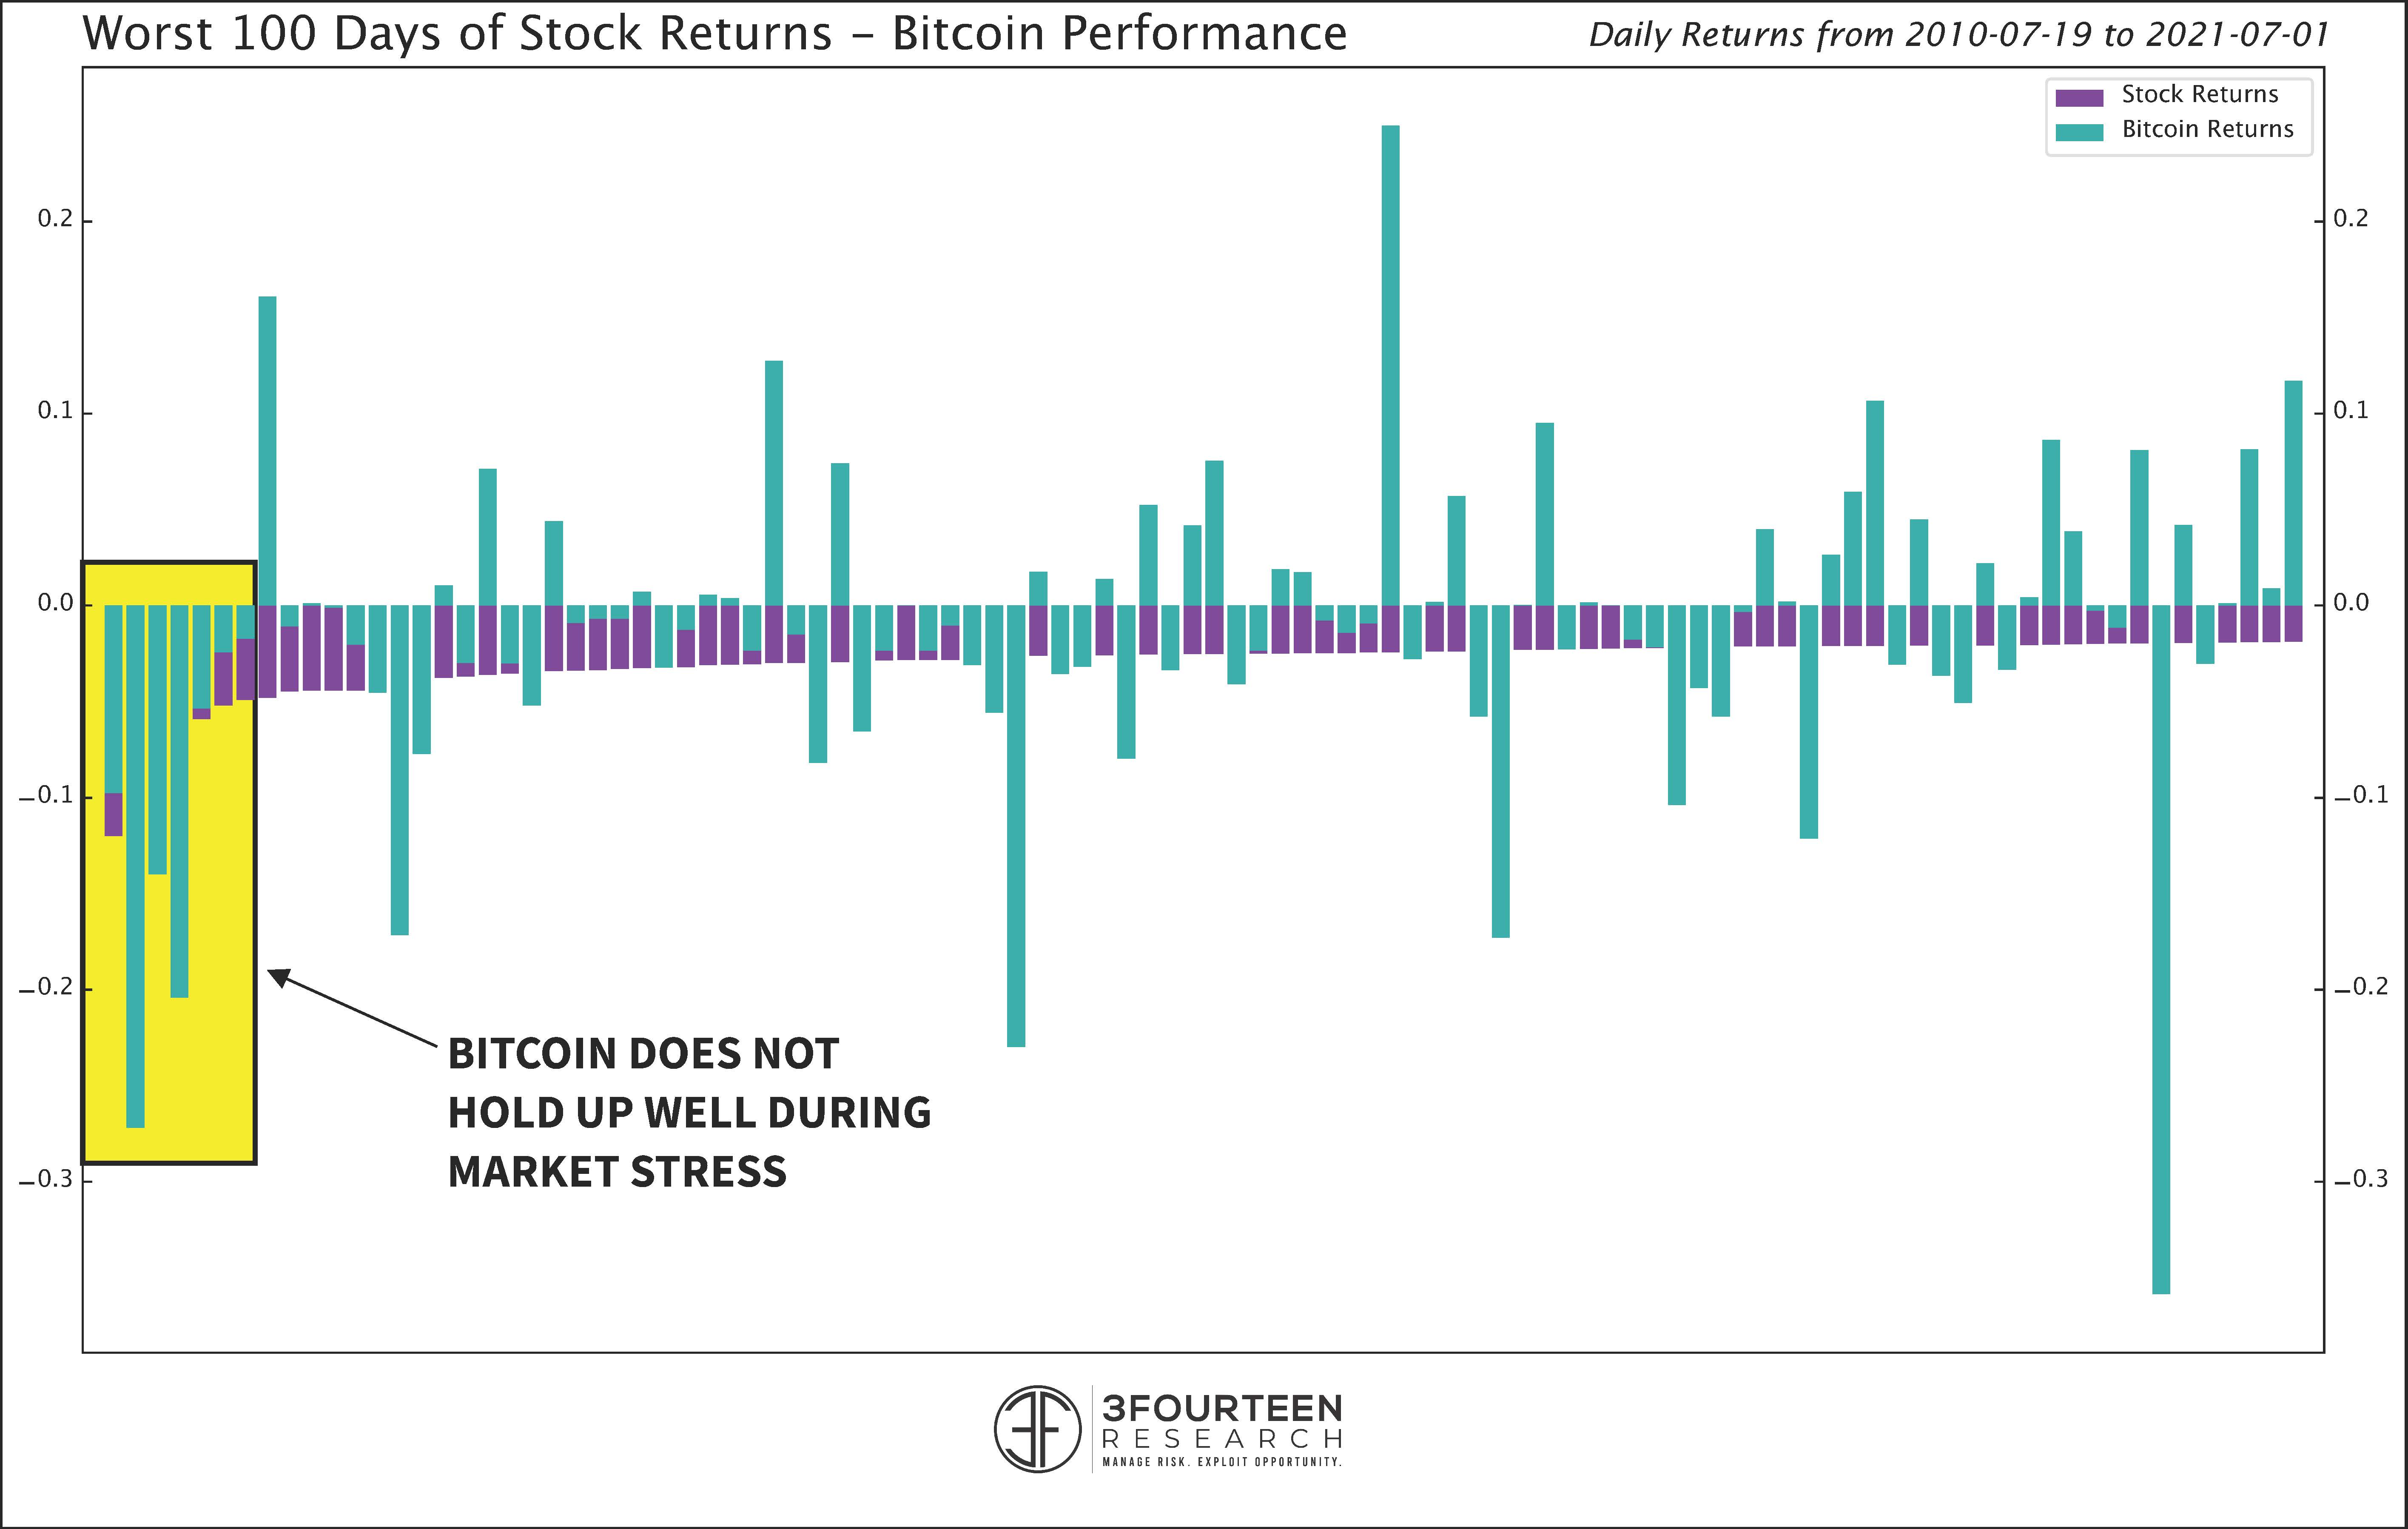 Bitcoin Performance on Worst 100 Days of Stock Return